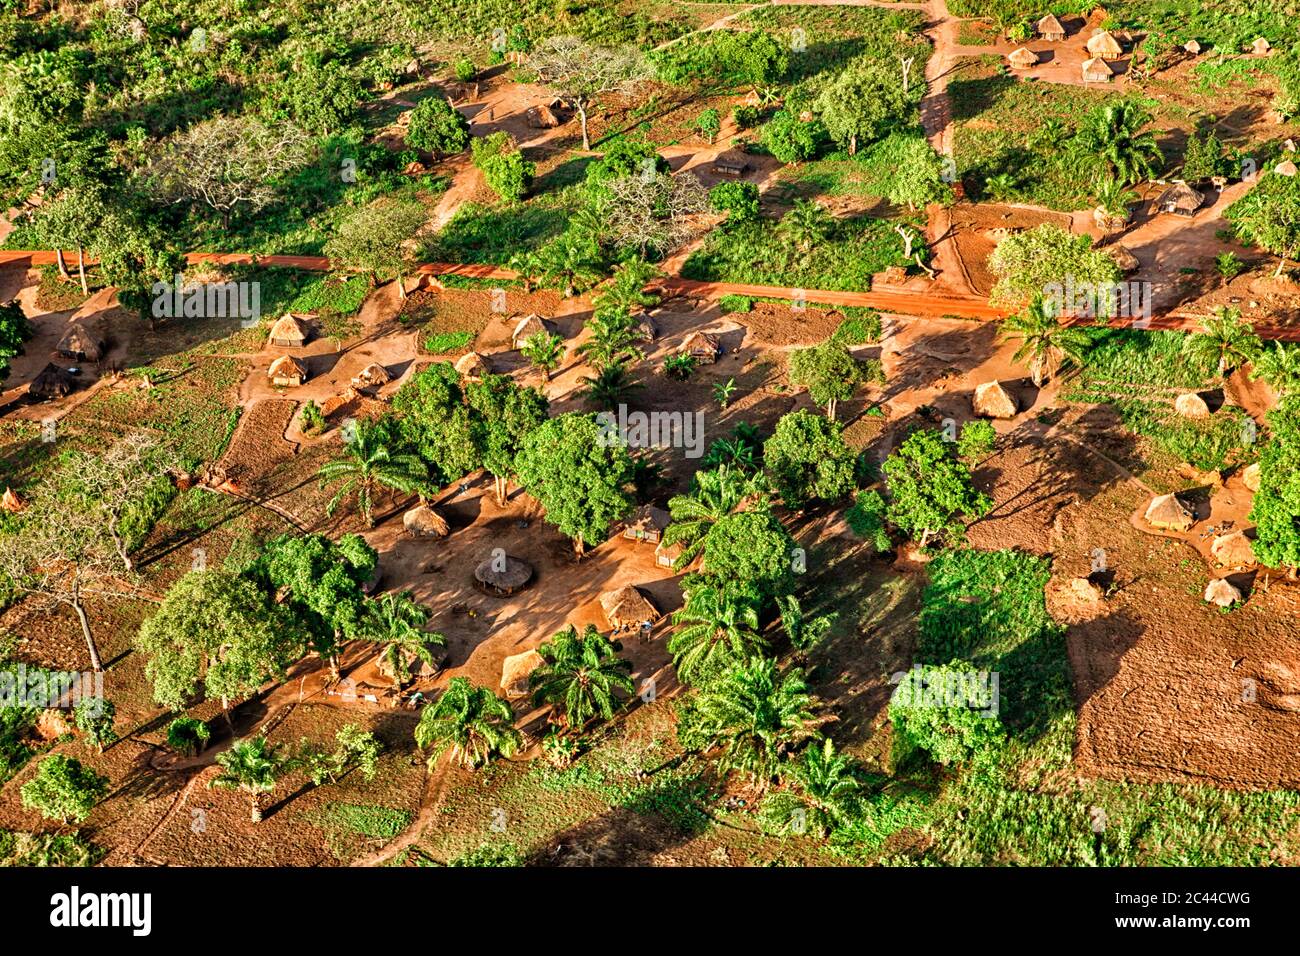 Democratic Republic of Congo, Haut-Uele, Nagero, Aerial view of village huts in Garamba National Park Stock Photo